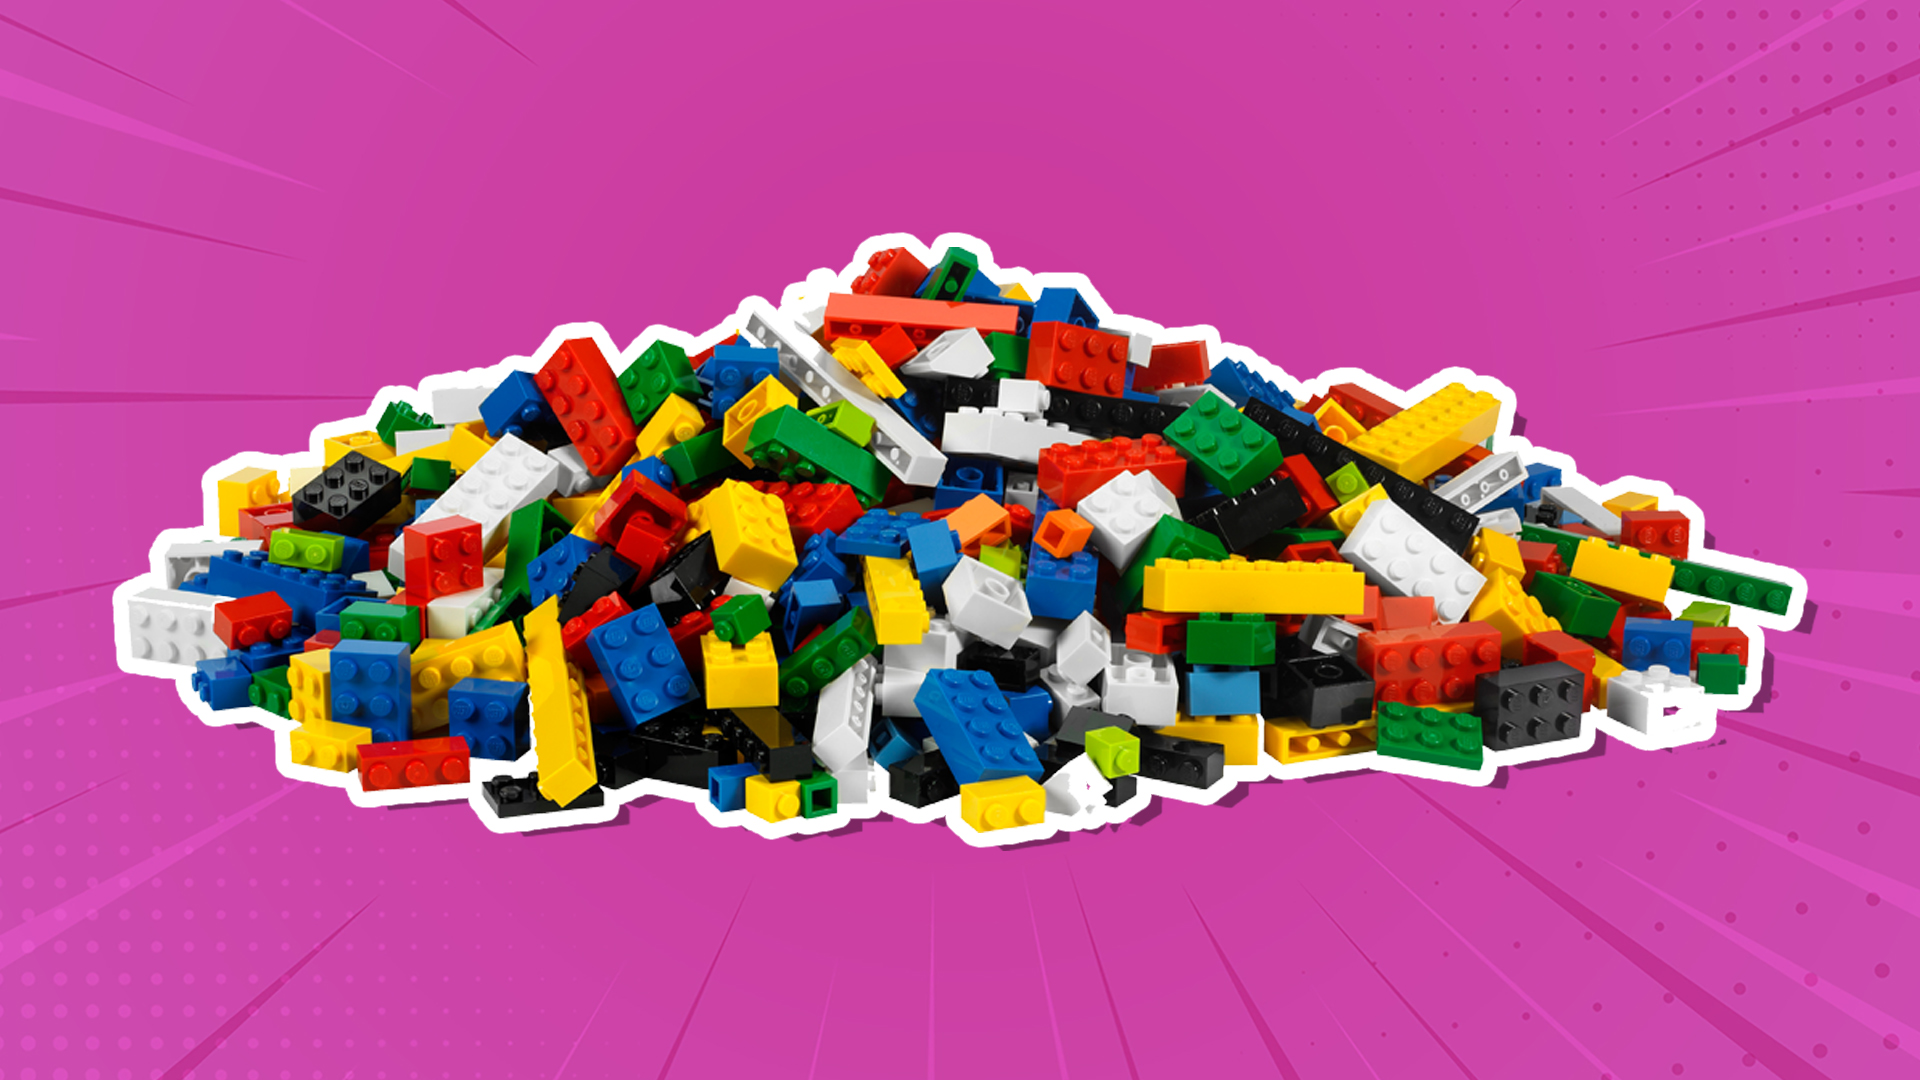 A big pile of LEGO